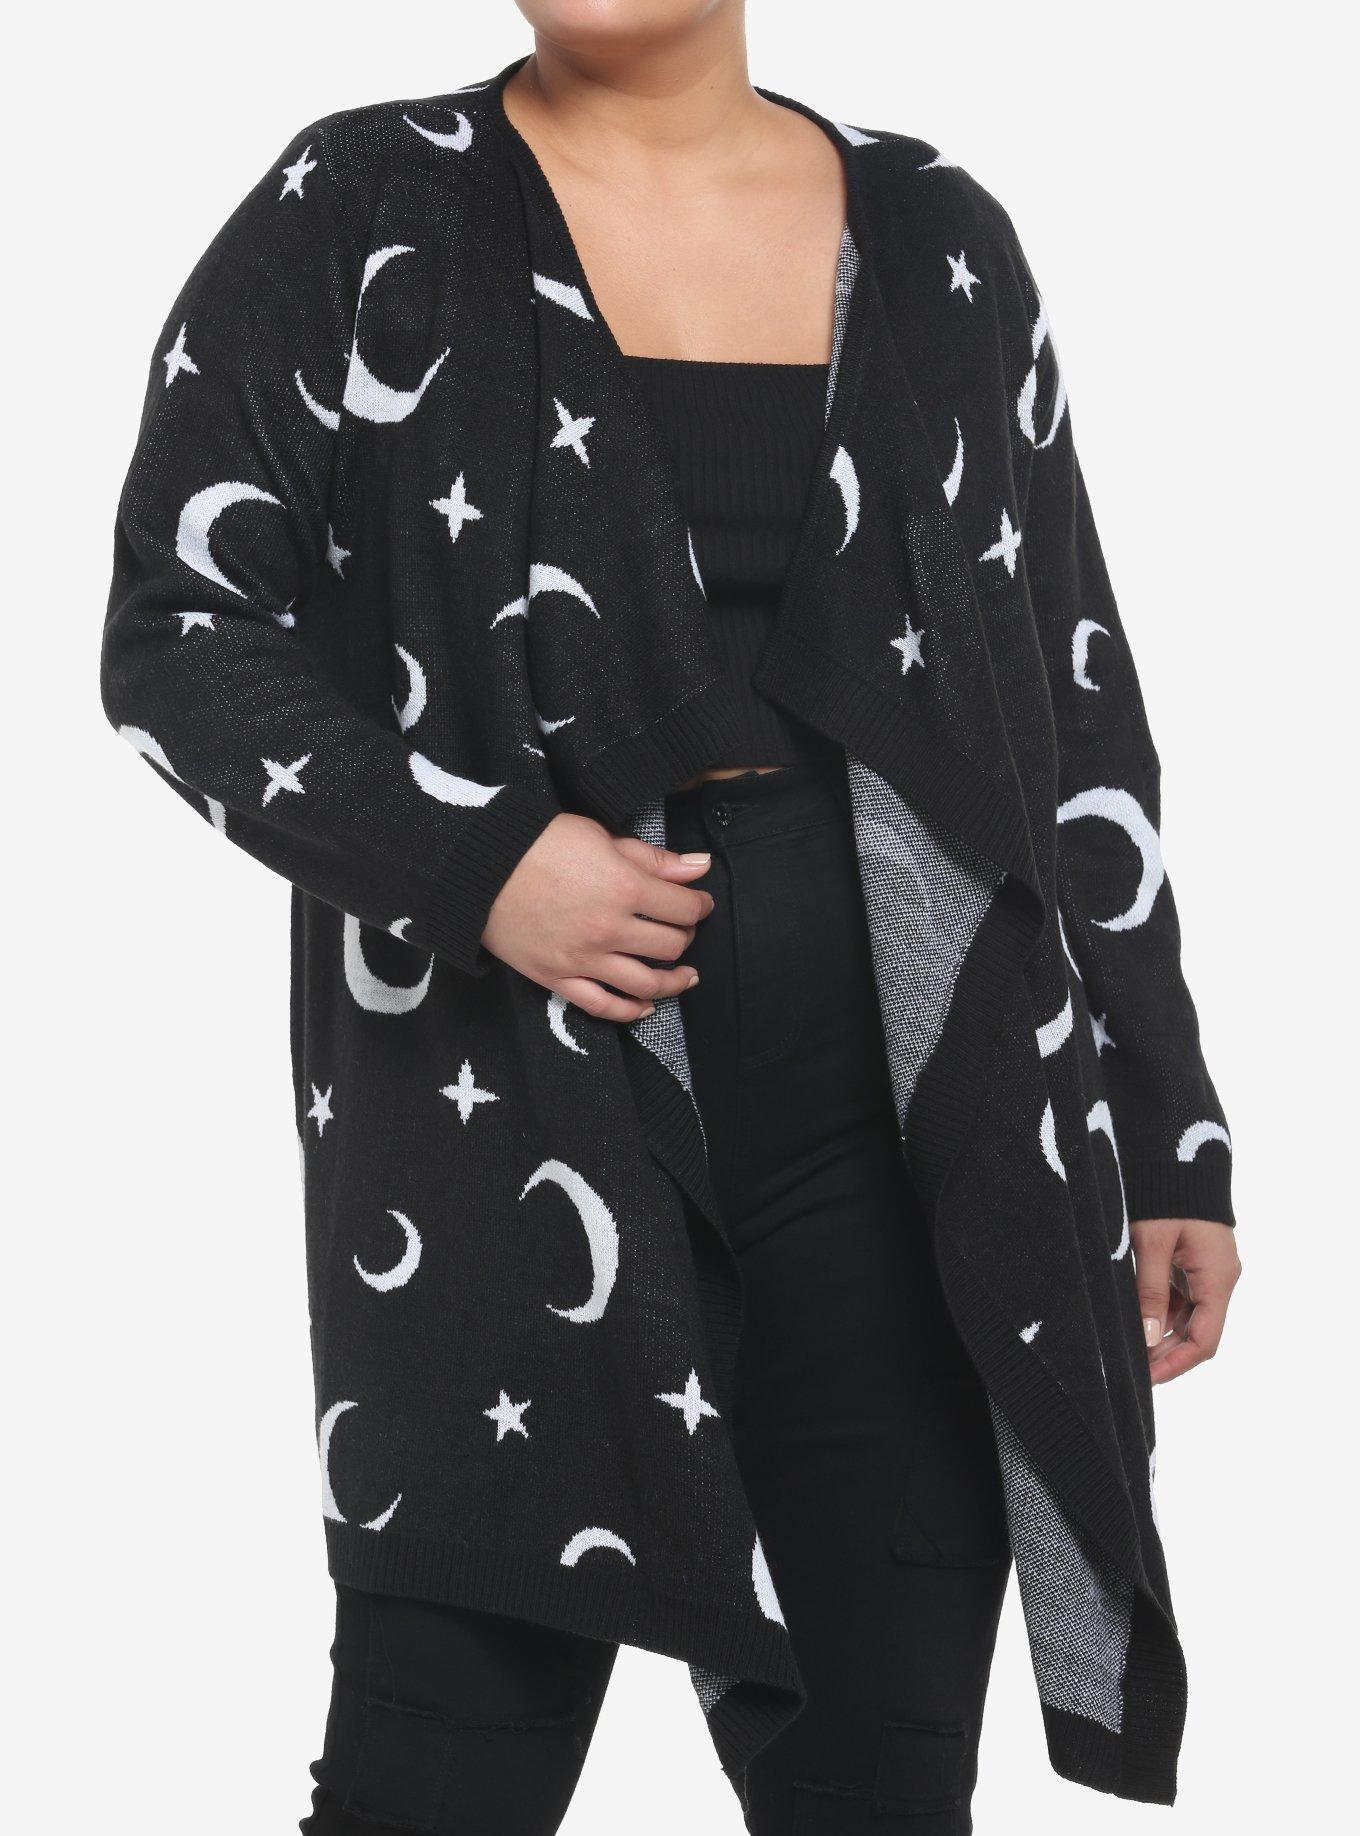 Moons & Stars Girls Open Cardigan Plus Size